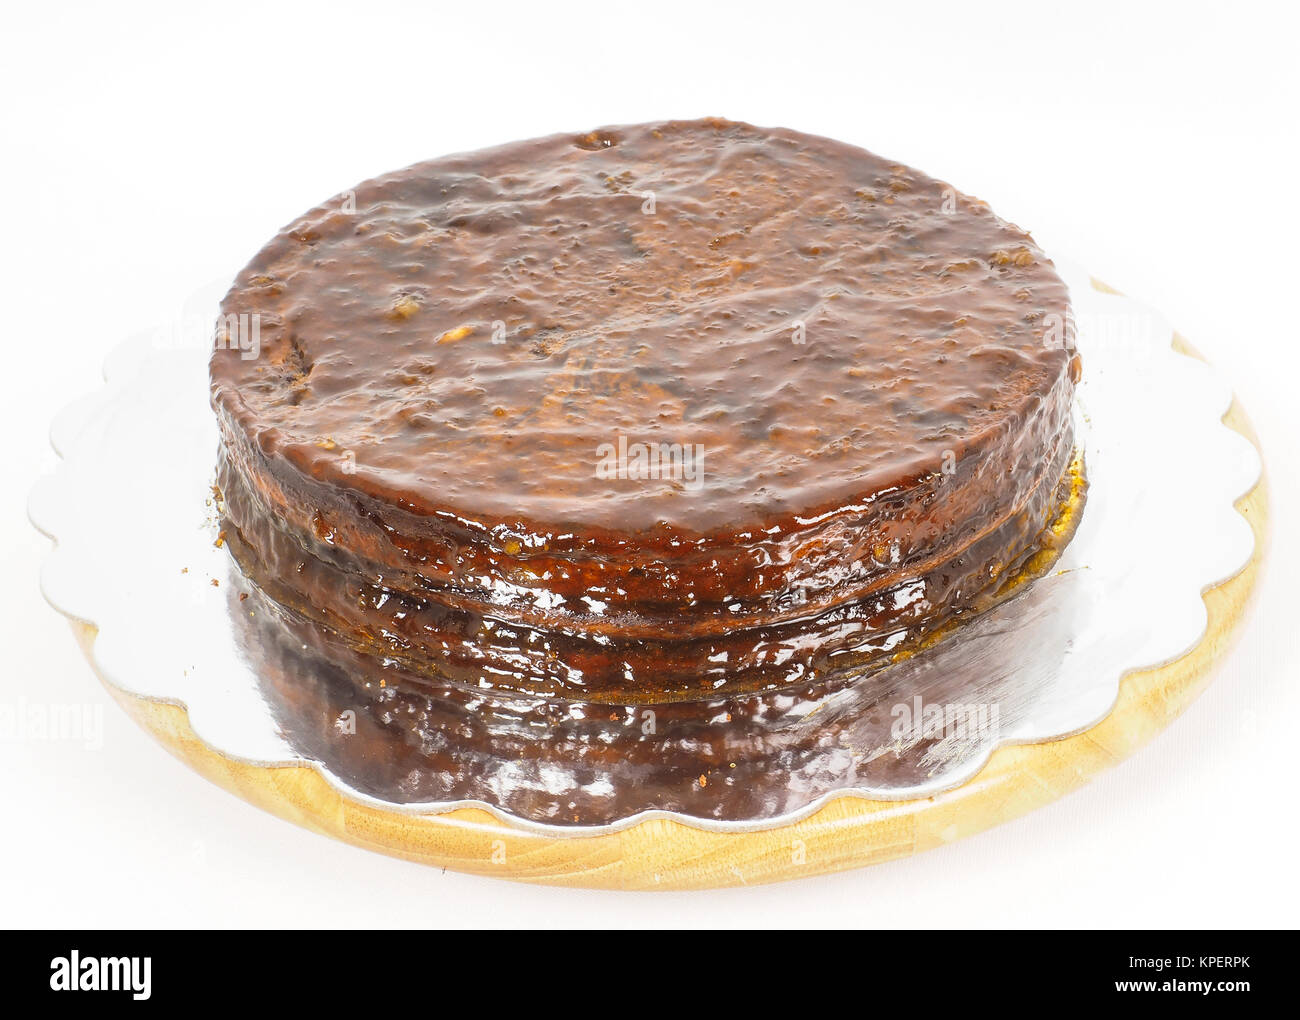 Apricot glazed Sacher torte chocolate cake on silver mirror plate Stock Photo